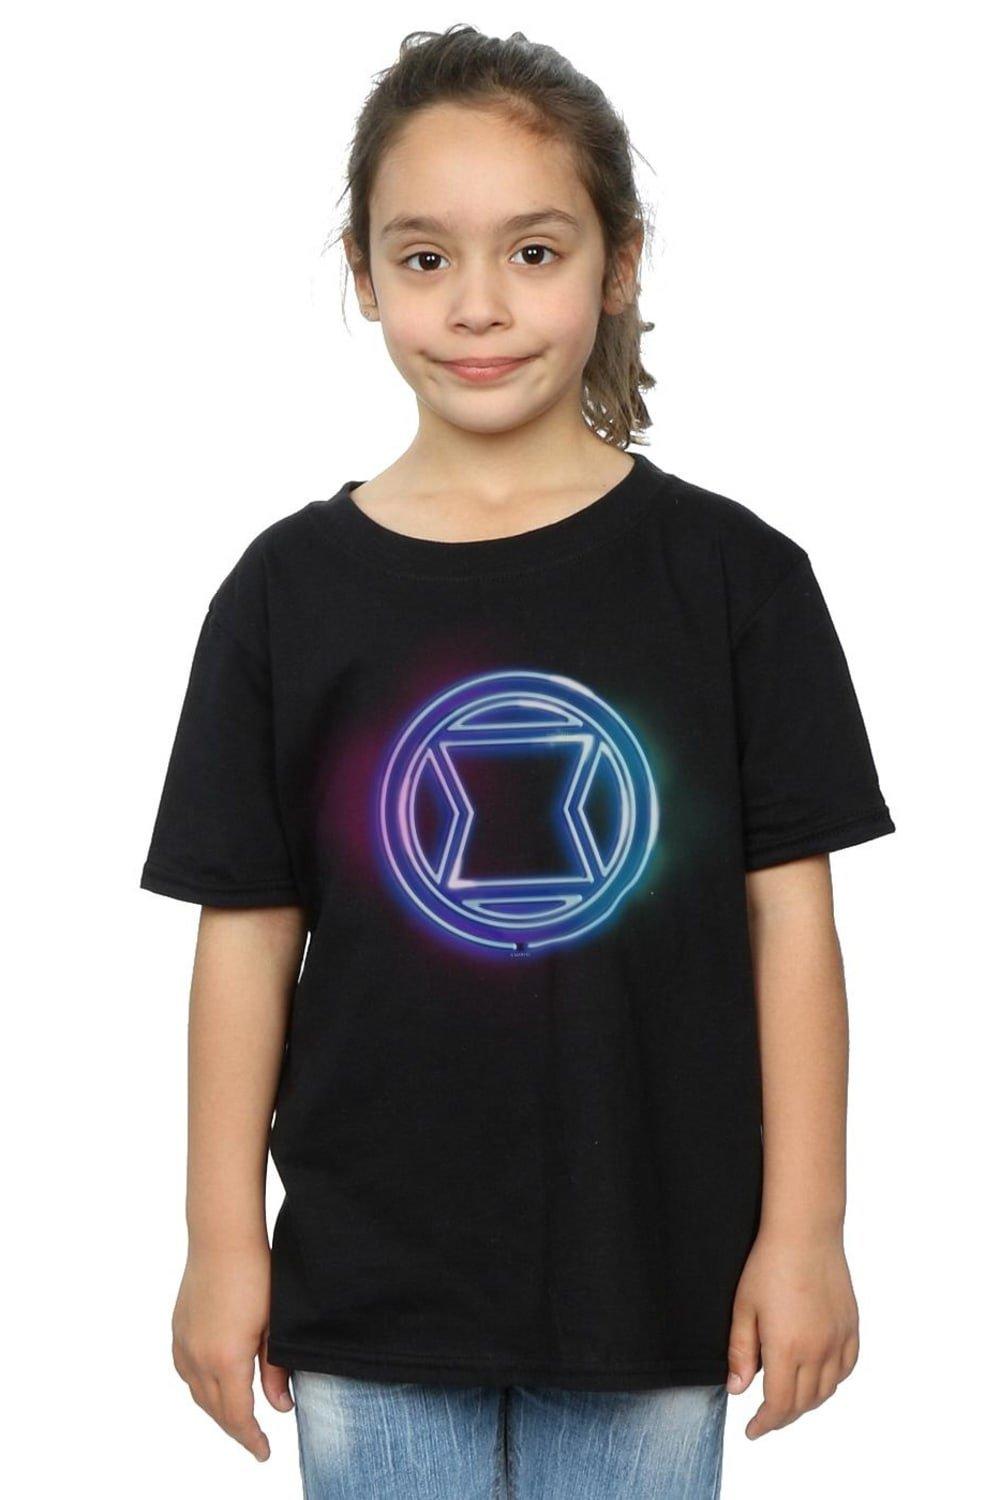 Black Widow Neon Logo Cotton T-Shirt